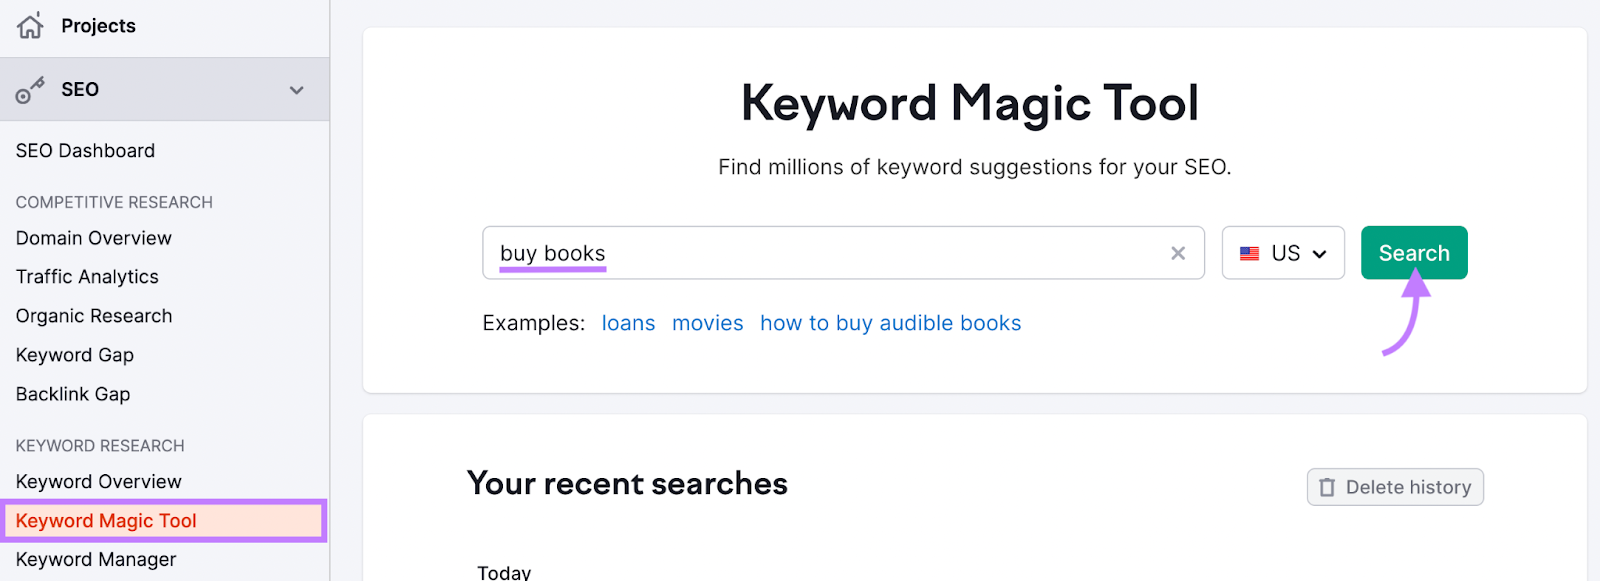 "buy books" entered into Keyword Magic Tool search bar